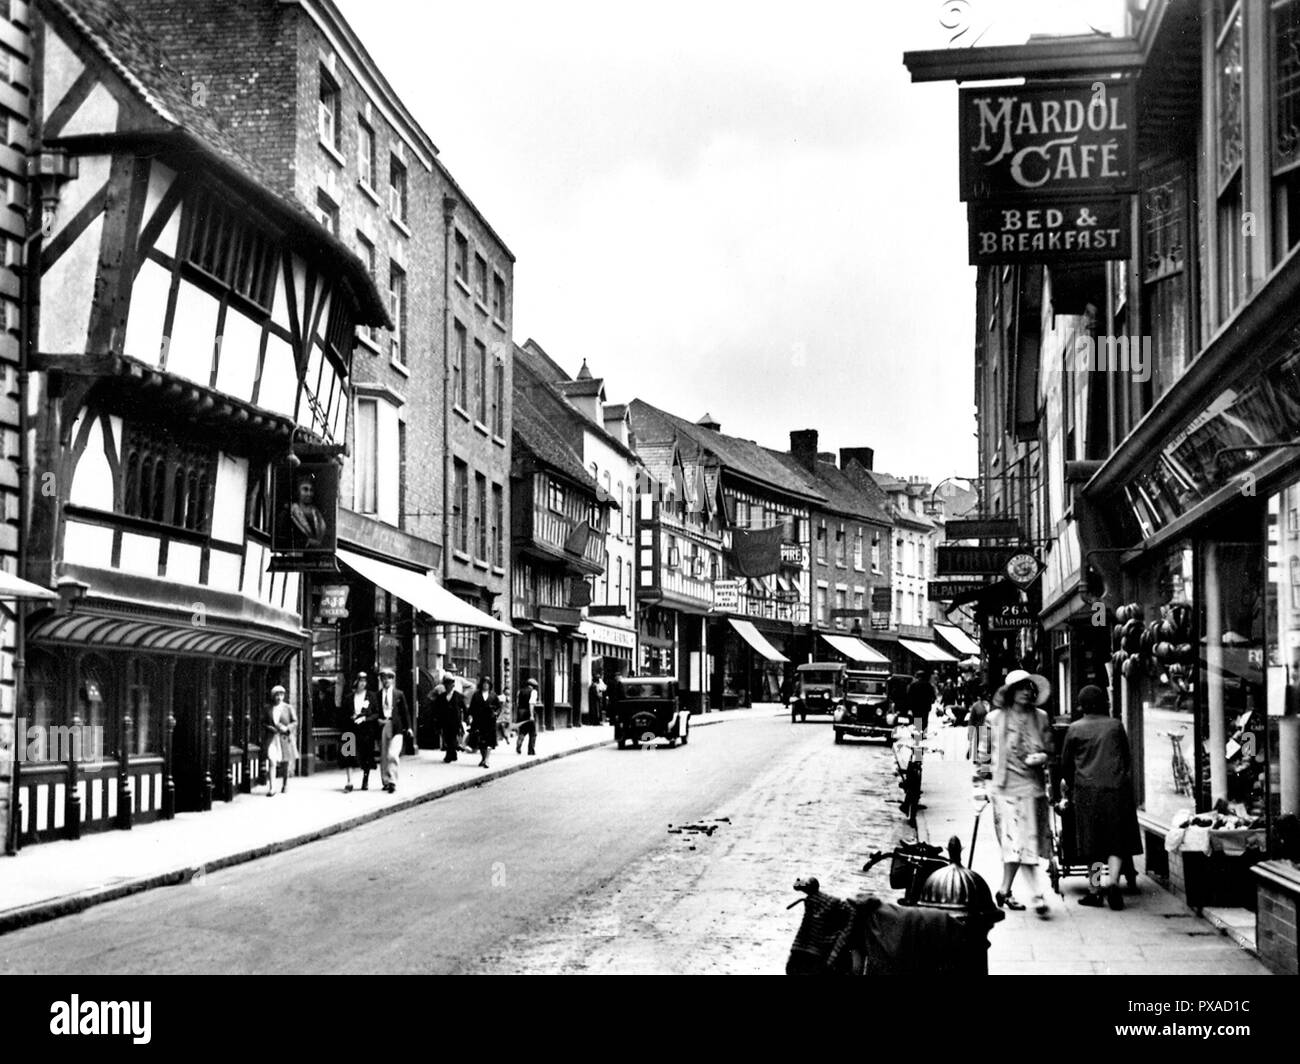 Mardol, Shrewsbury early 1900s Stock Photo